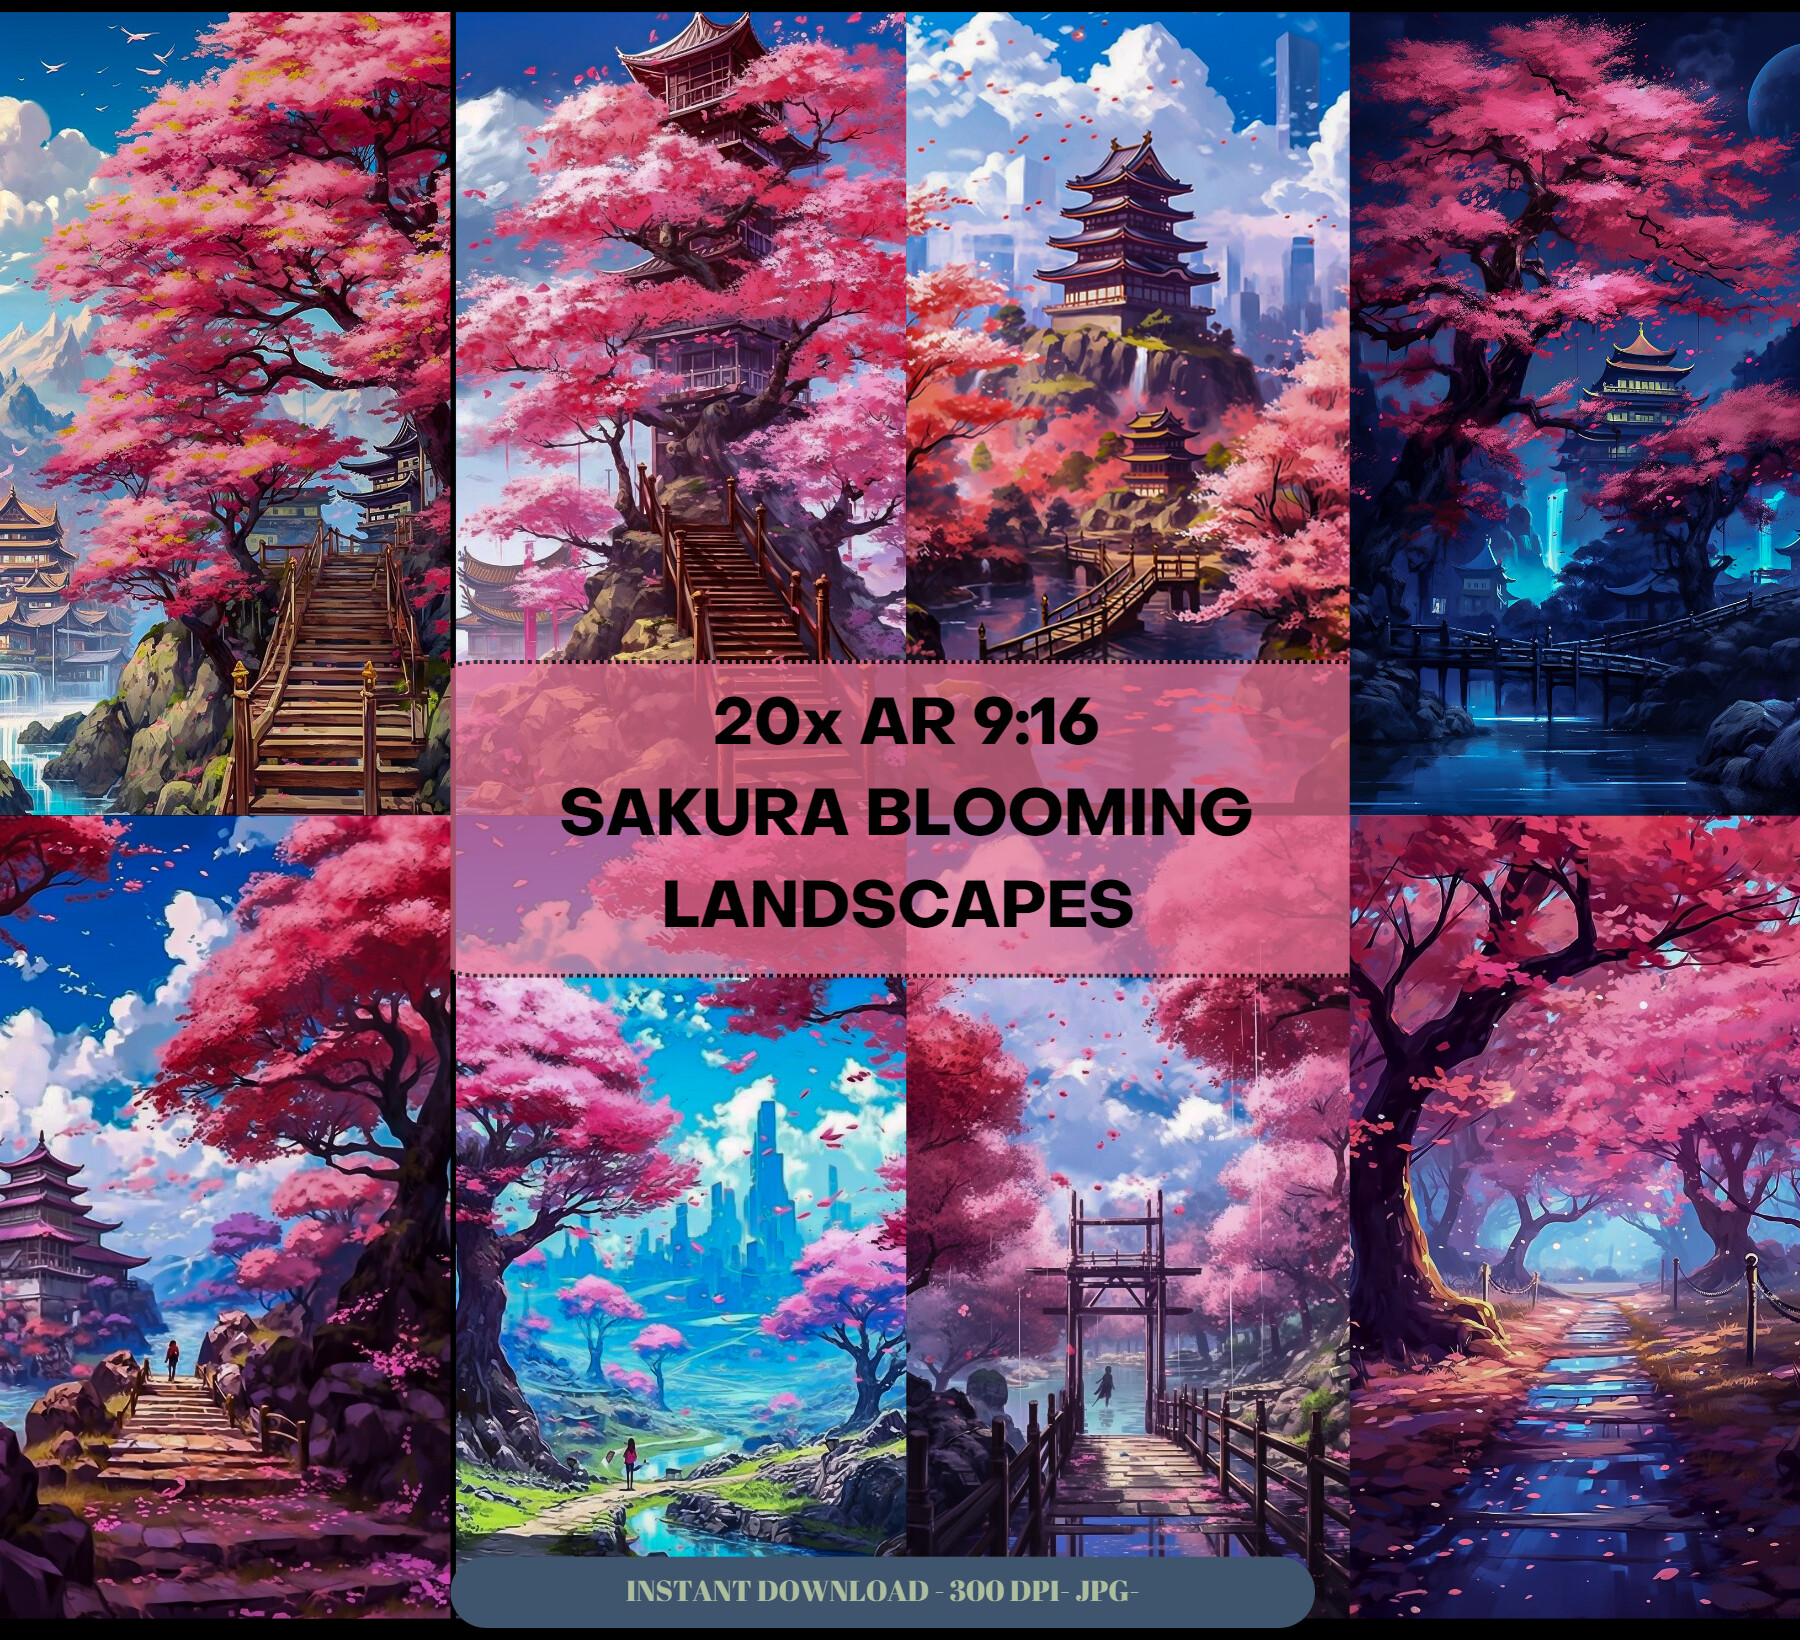 Sakura Tree - Other & Anime Background Wallpapers on Desktop Nexus (Image  2123714)